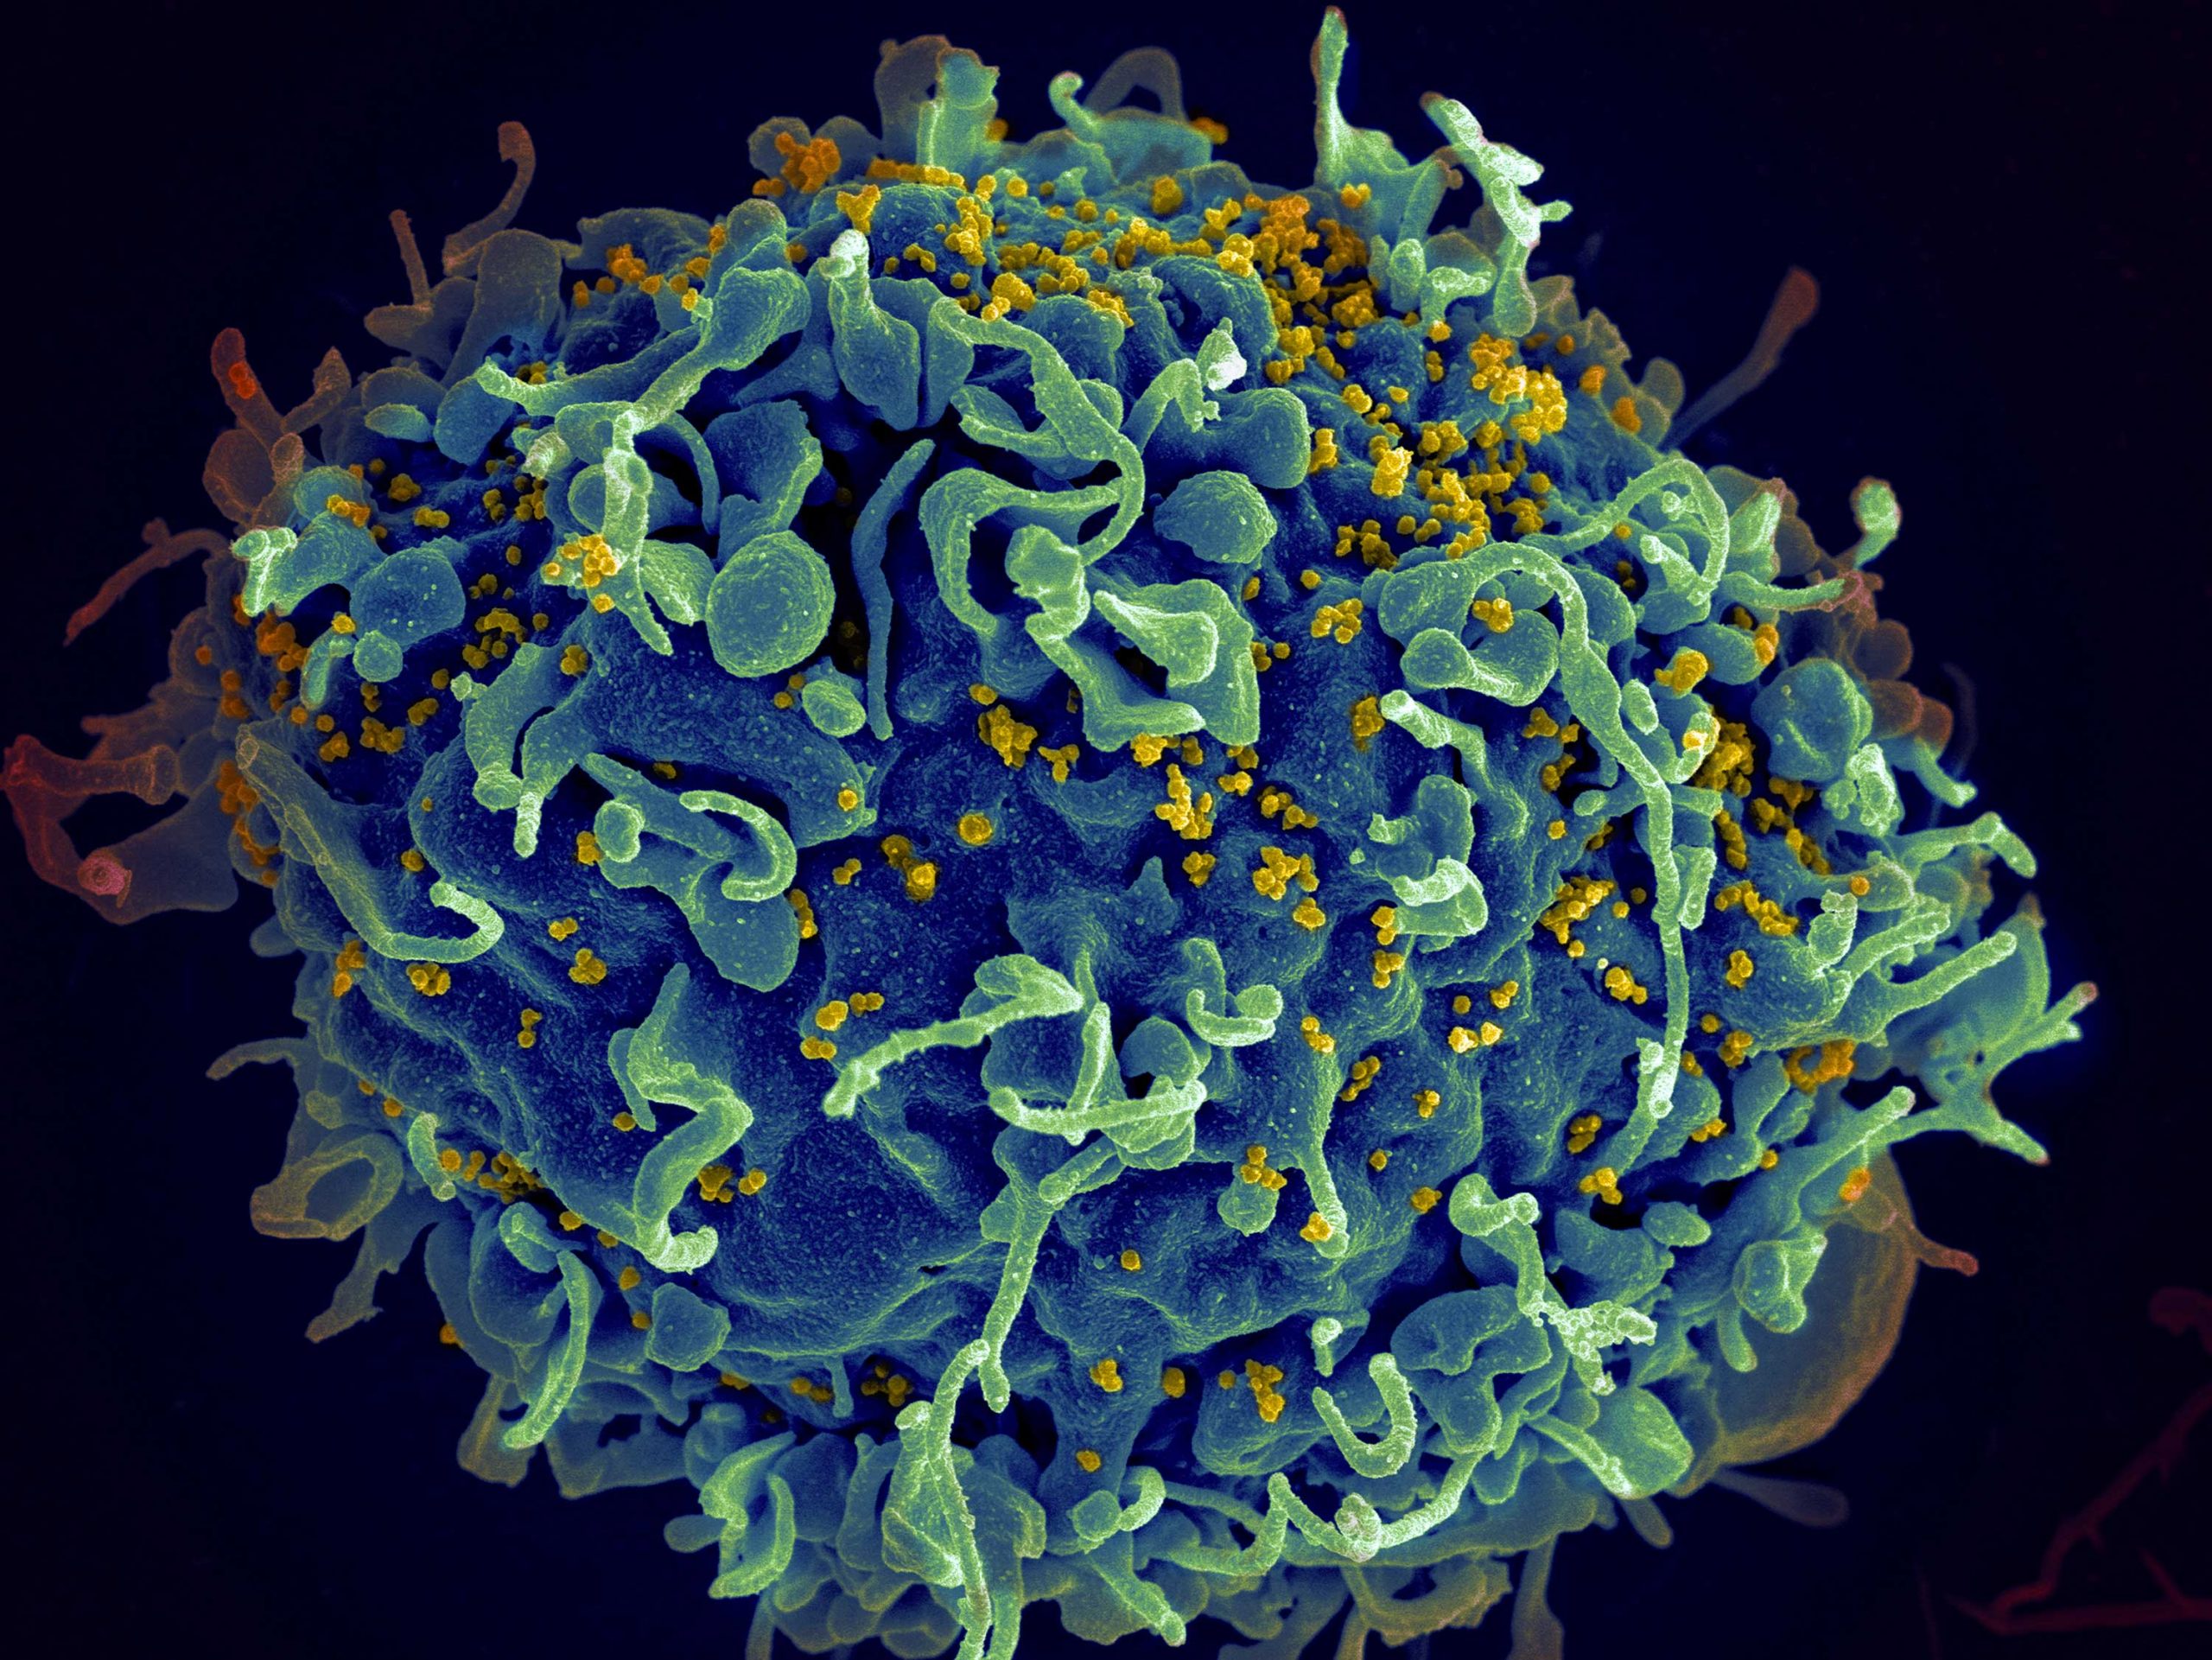 HIV virus in disguise tricks immune system